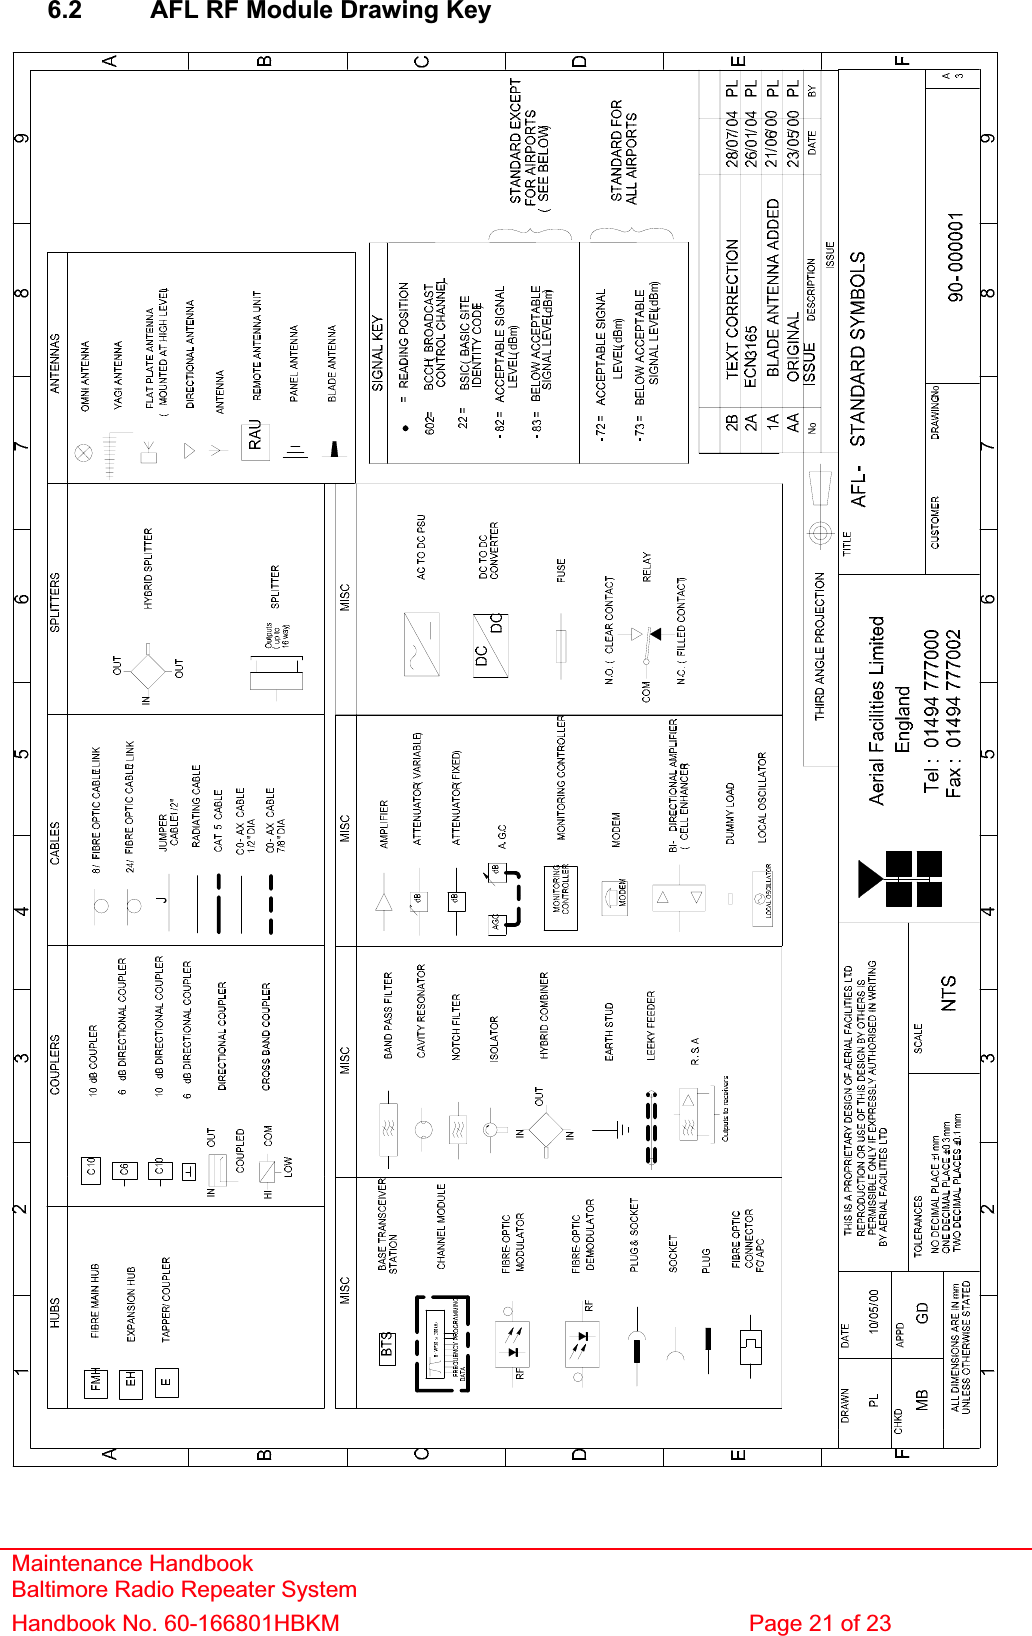 6.2  AFL RF Module Drawing Key Maintenance Handbook Baltimore Radio Repeater System Handbook No. 60-166801HBKM  Page 21 of 23 